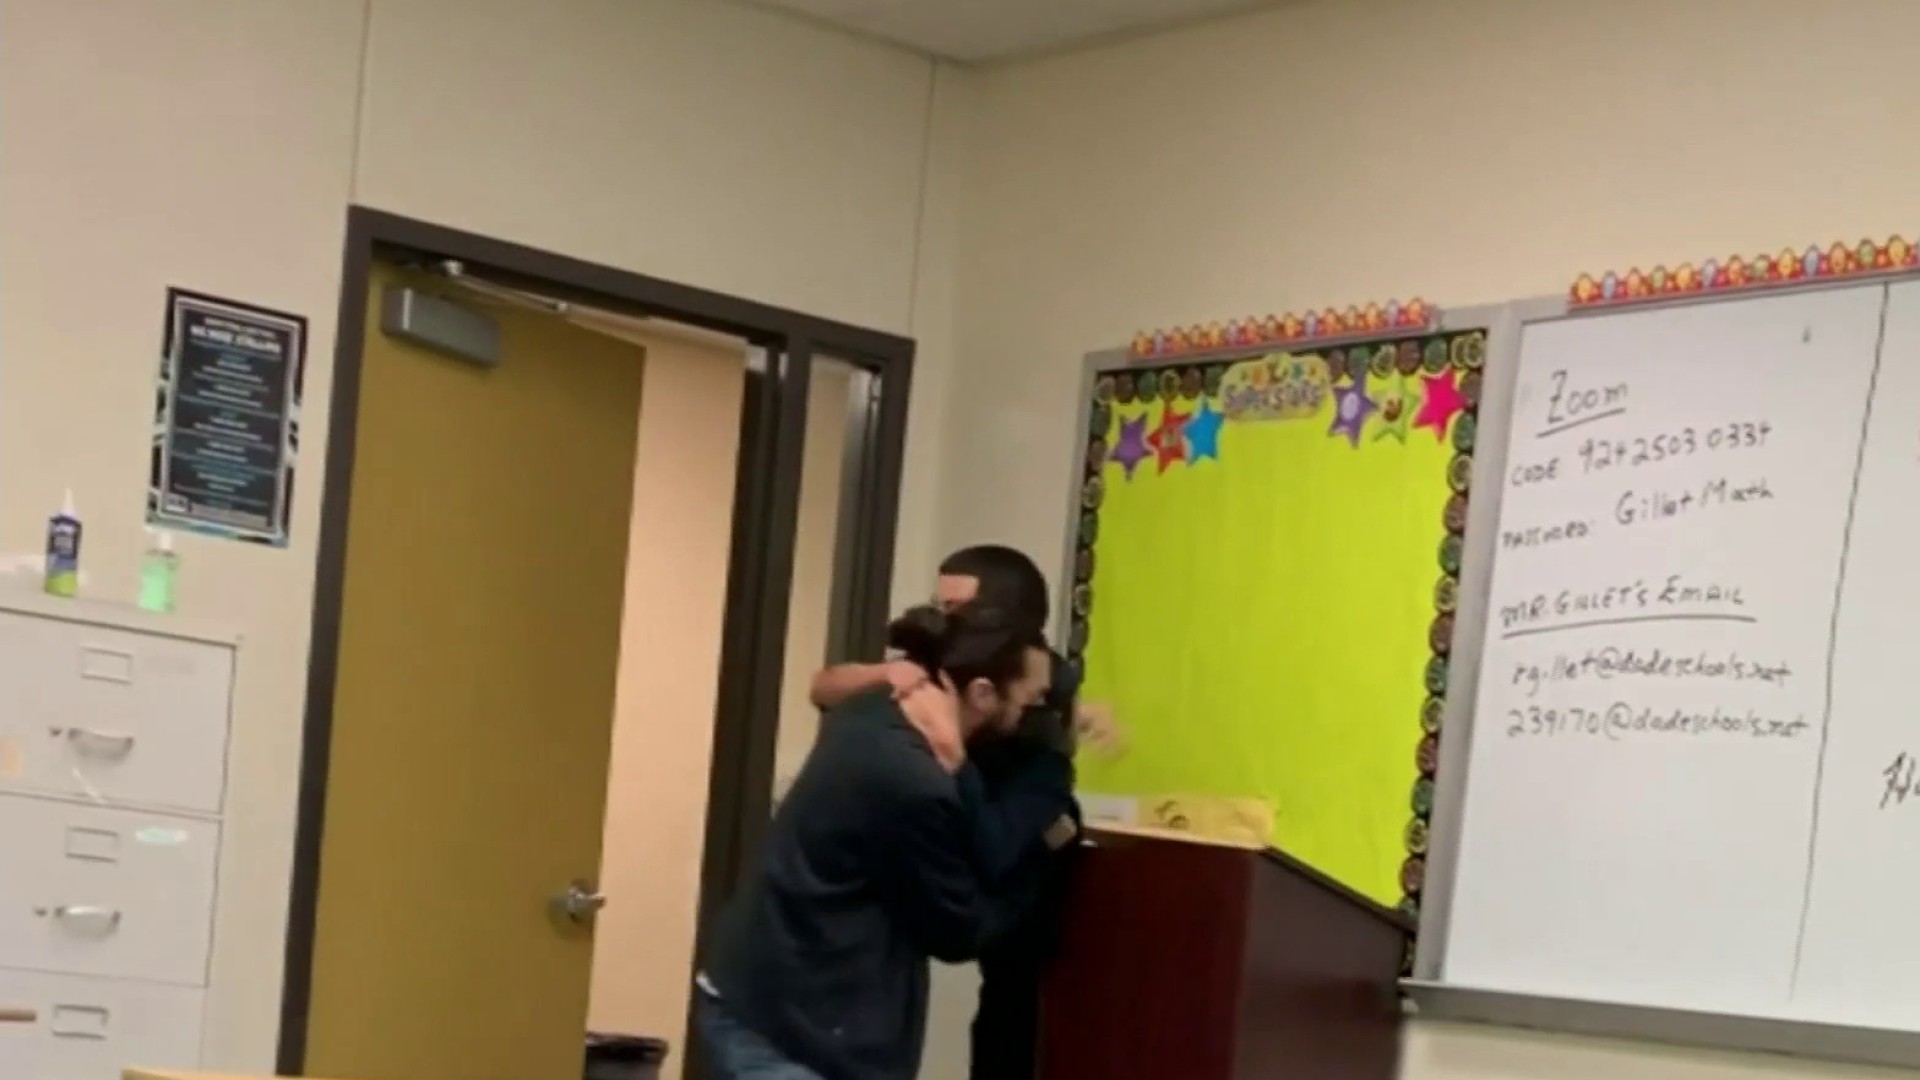 Video shows Florida teacher slamming student in dispute over bathroom break